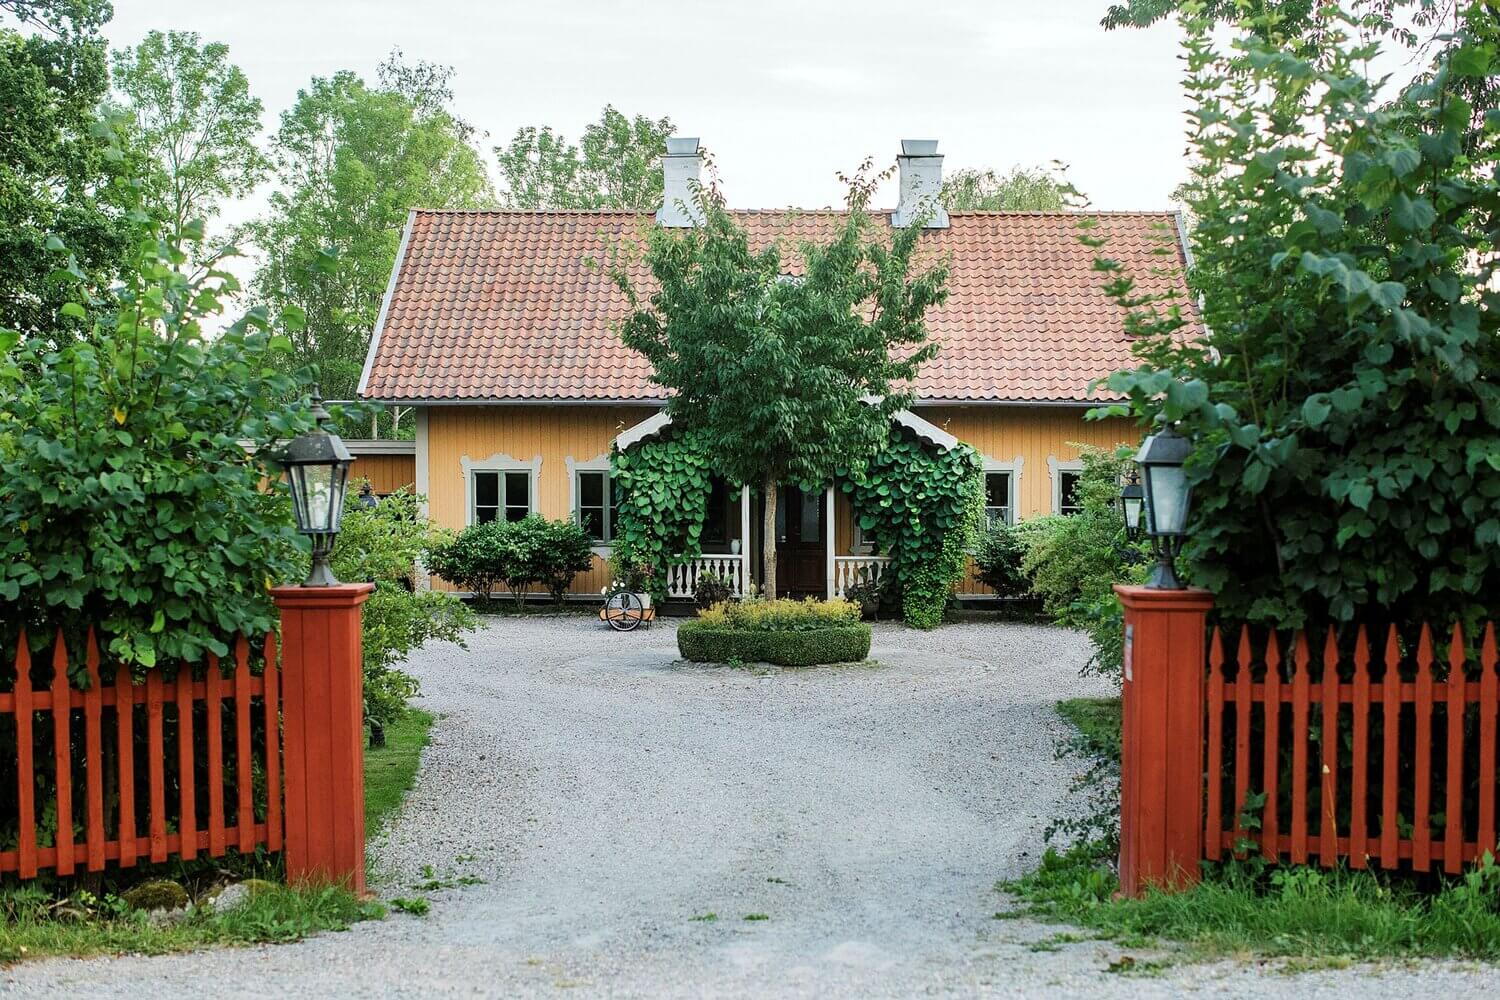 AnIdyllicFarmhouseInTheSwedishCountryside TheNordroom18 An Idyllic Farmhouse In The Swedish Countryside